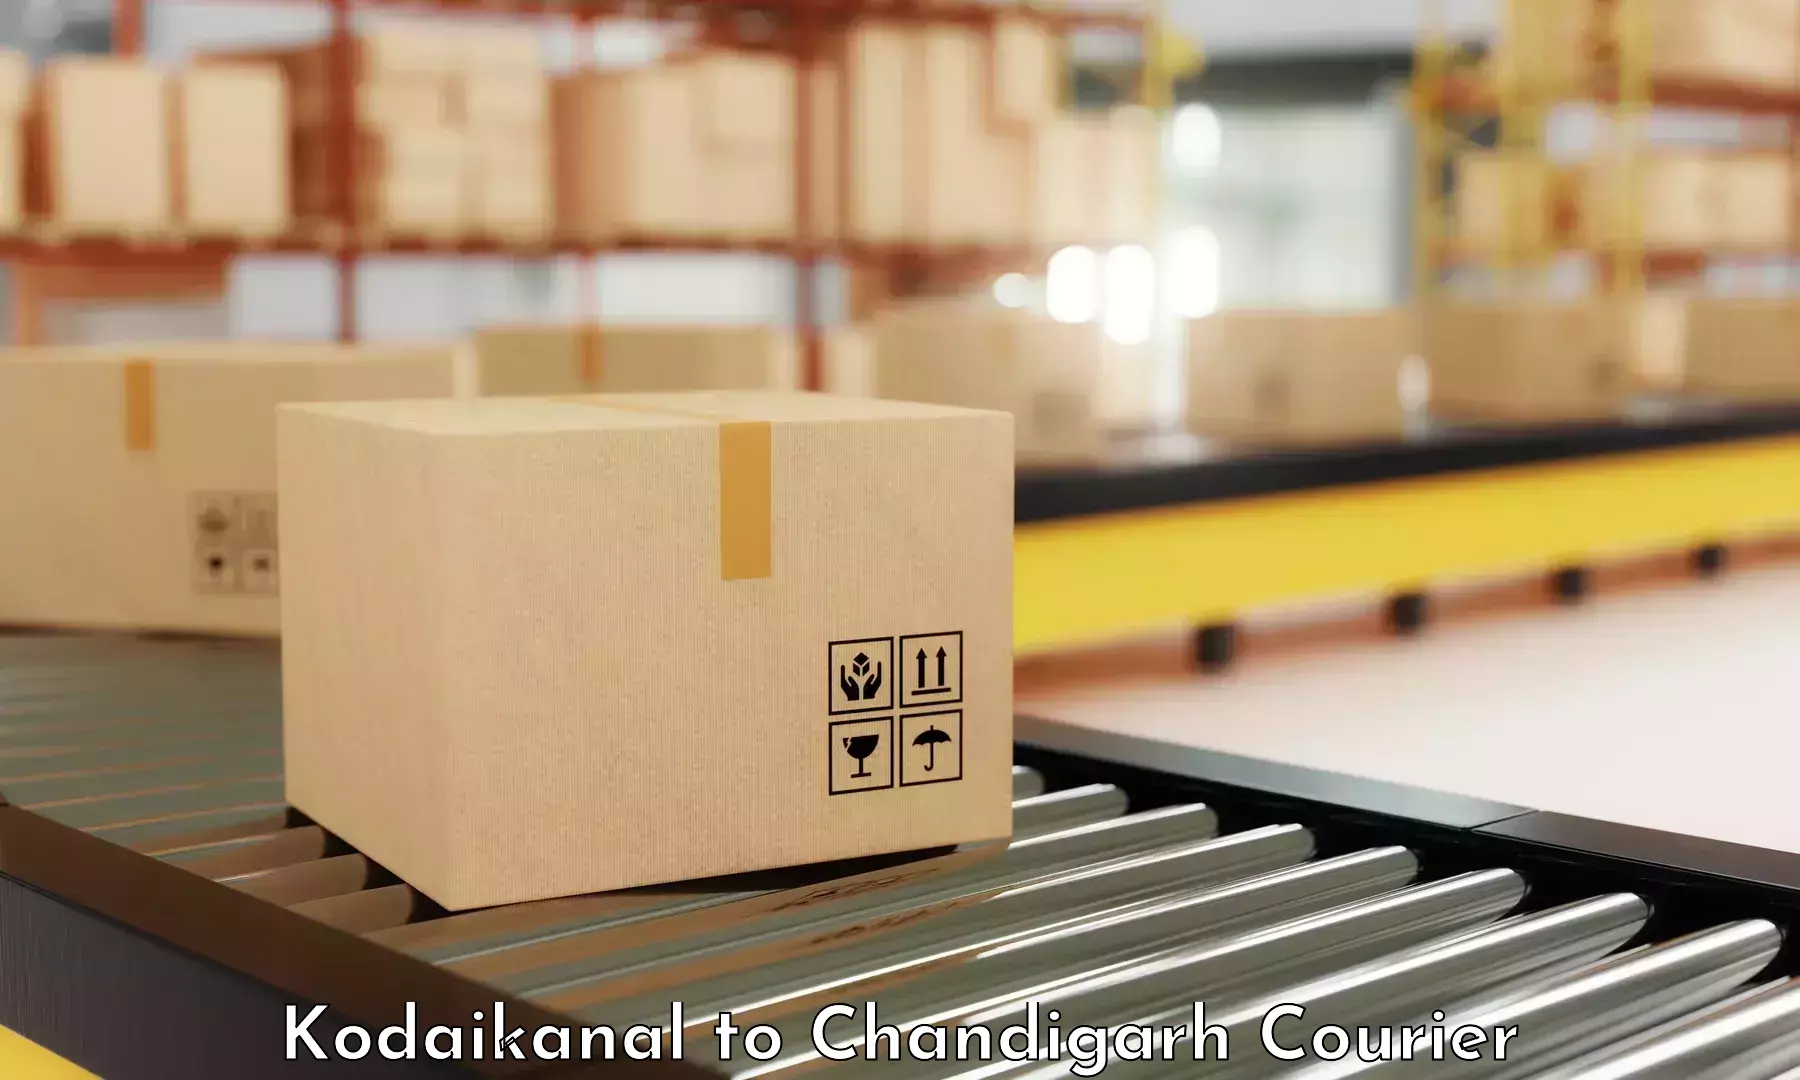 Courier service comparison Kodaikanal to Chandigarh